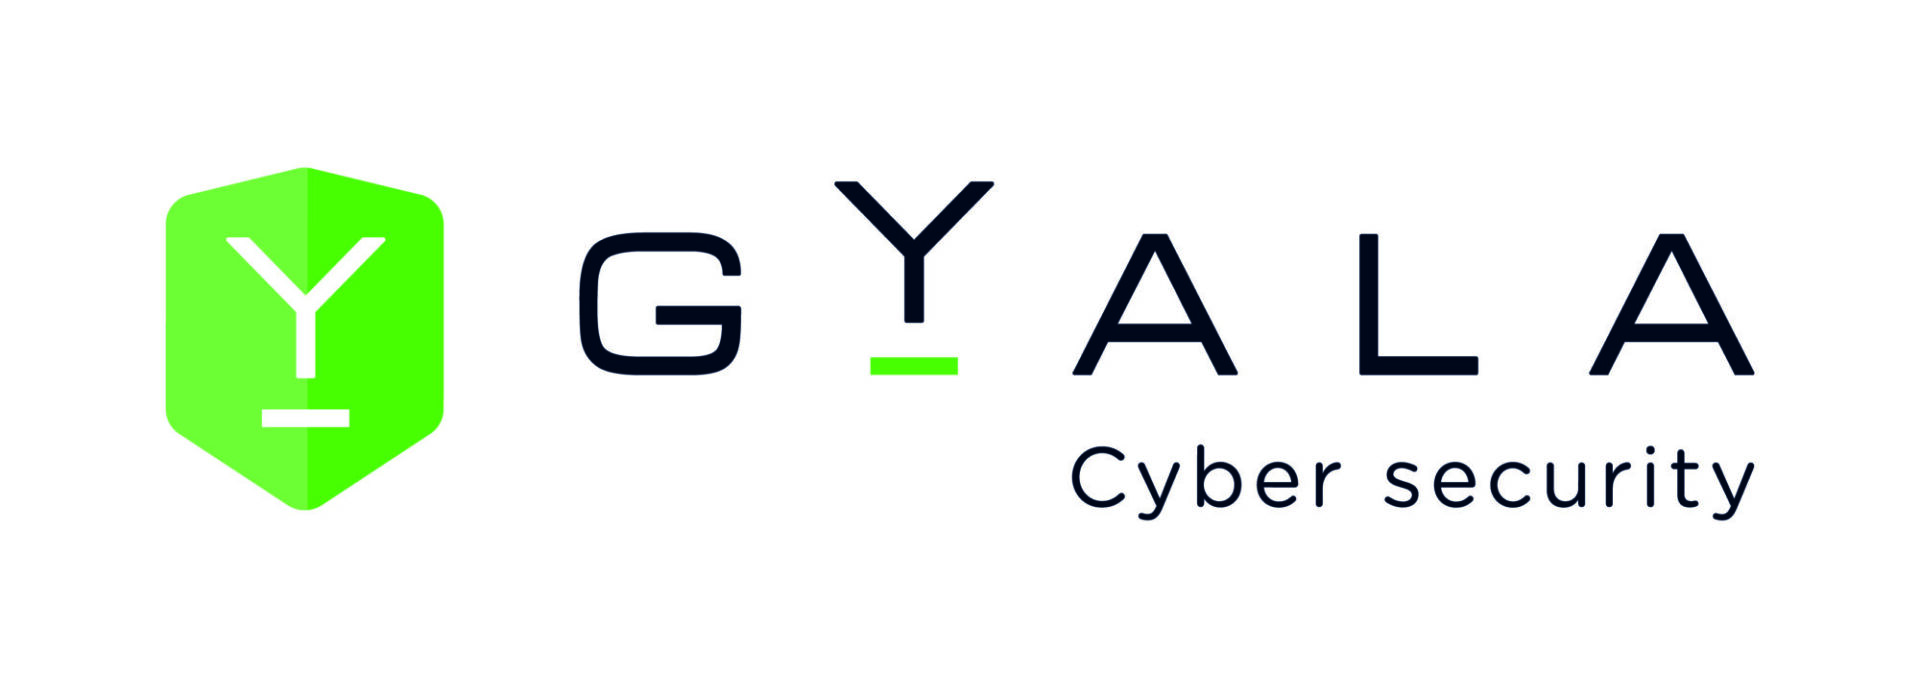 Agger- La Cybersecurity Italiana